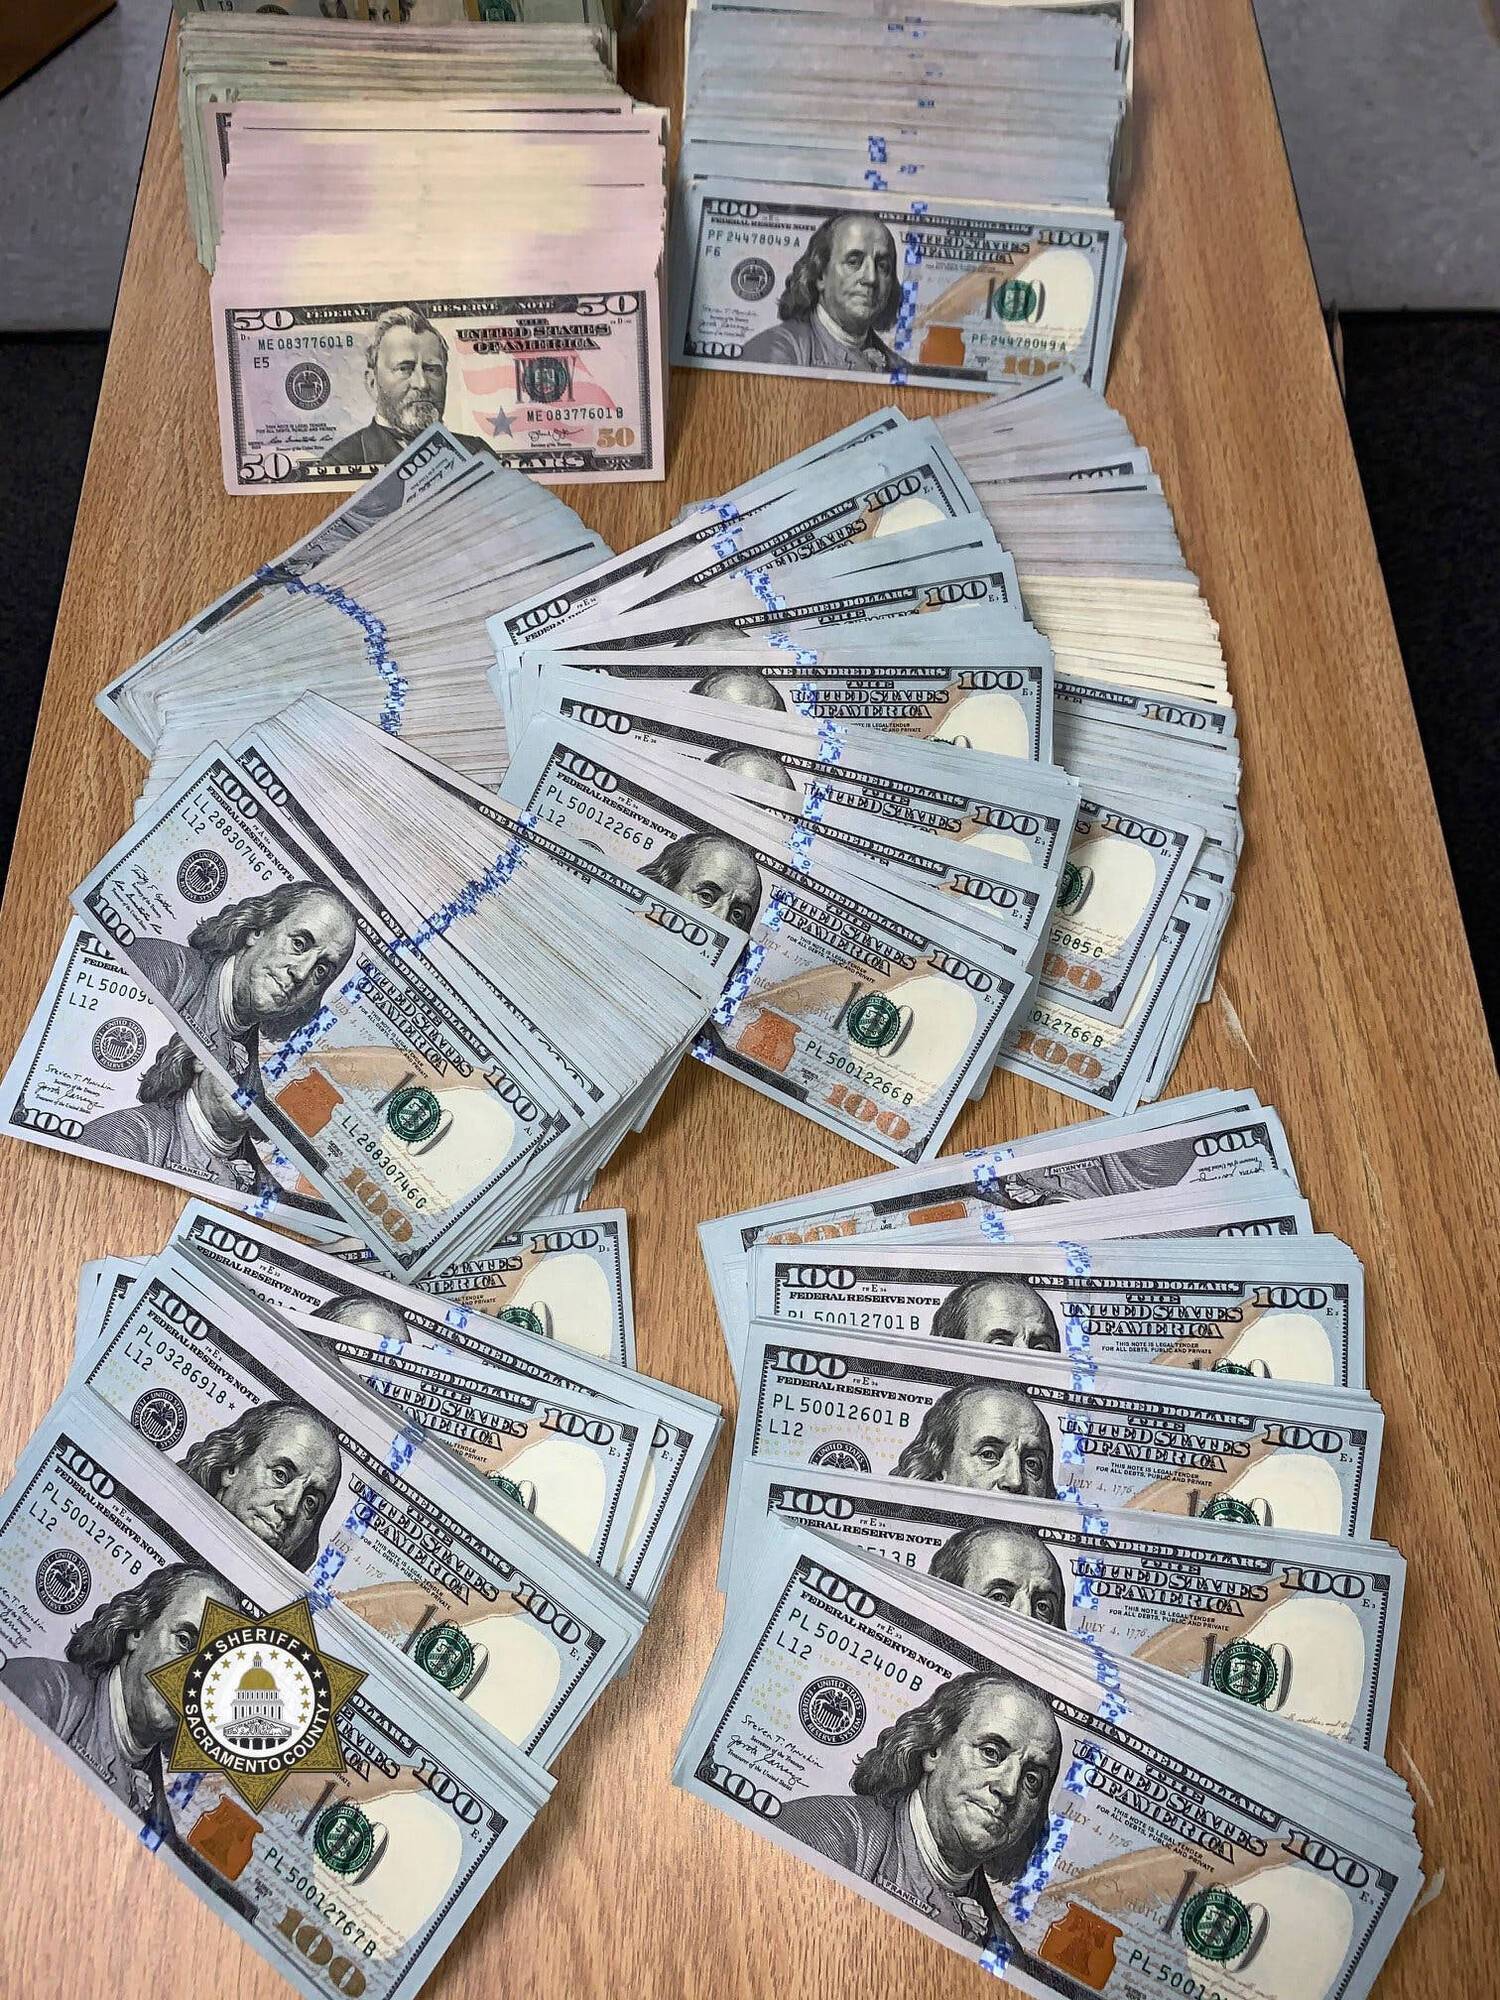 $300 000, які знайшла поліція під час обшуку.